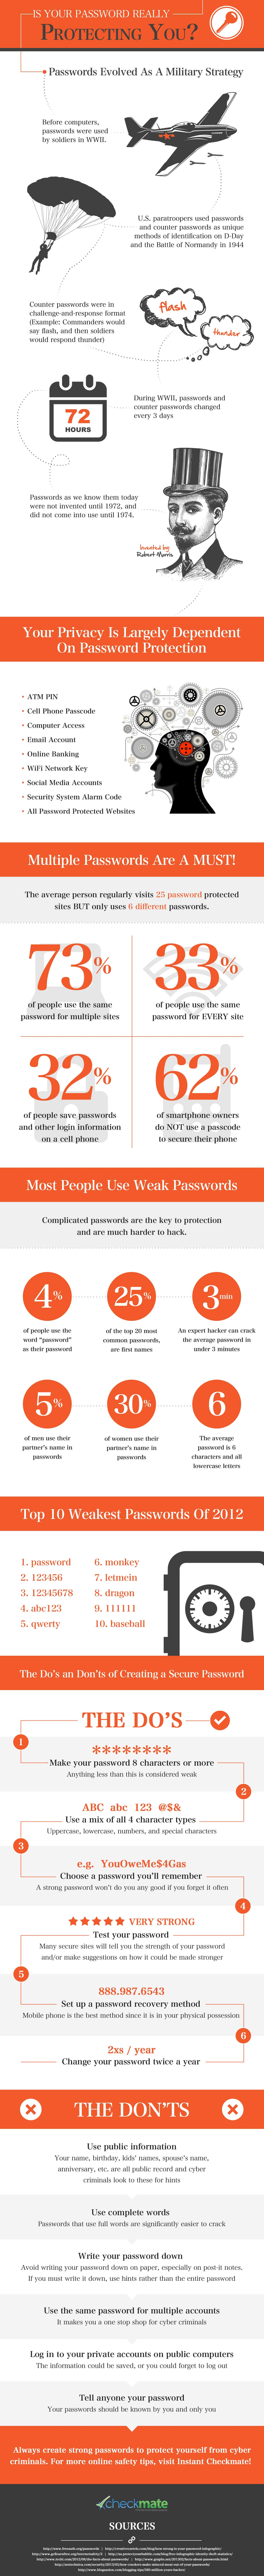 Creating Passwords Infographic